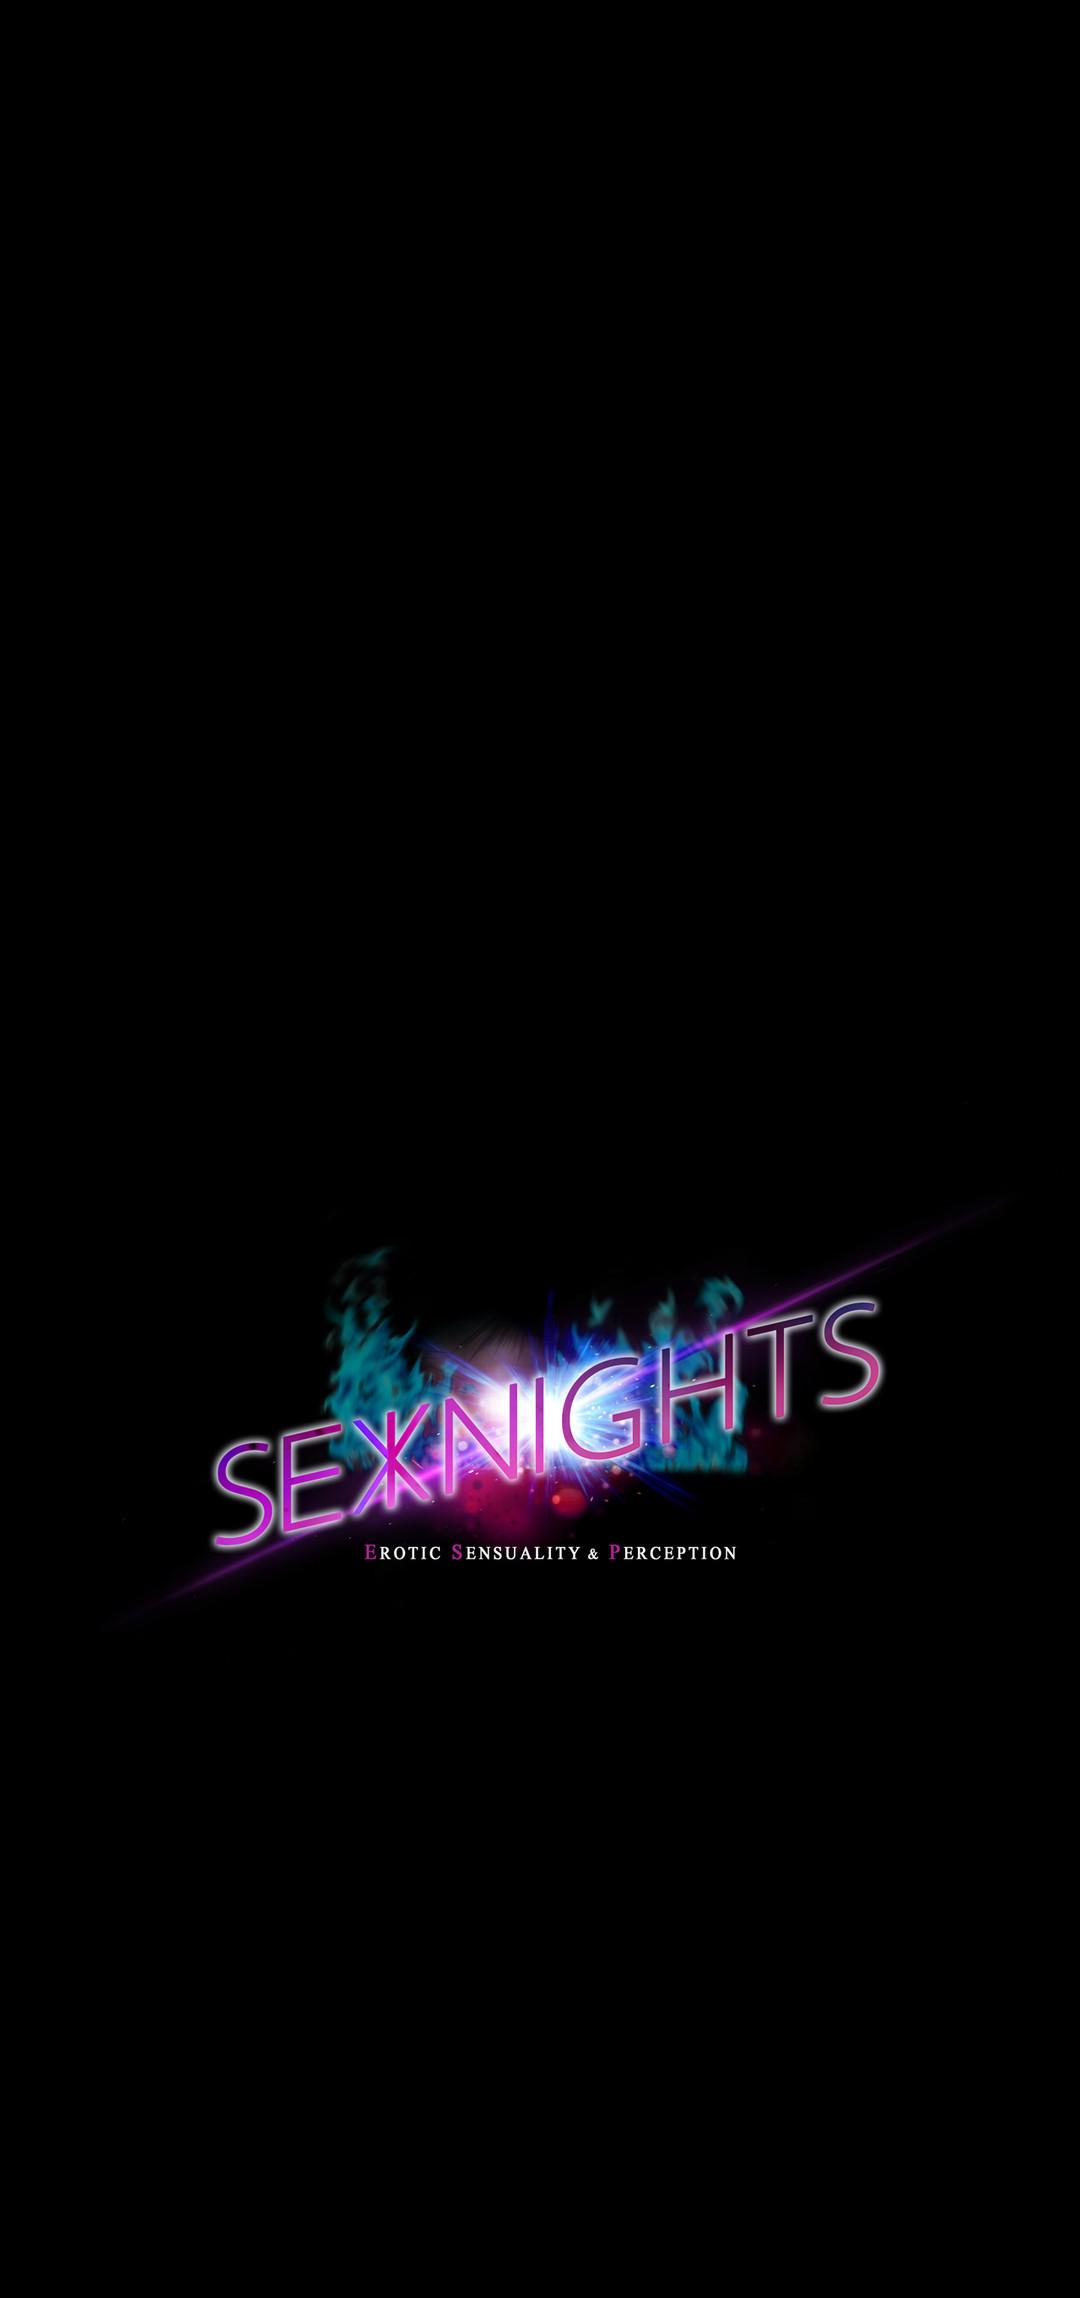 [BYMAN] Sex Knights-Erotic Sensuality & Perception Ch.1-17 (English) (Ongoing) 254